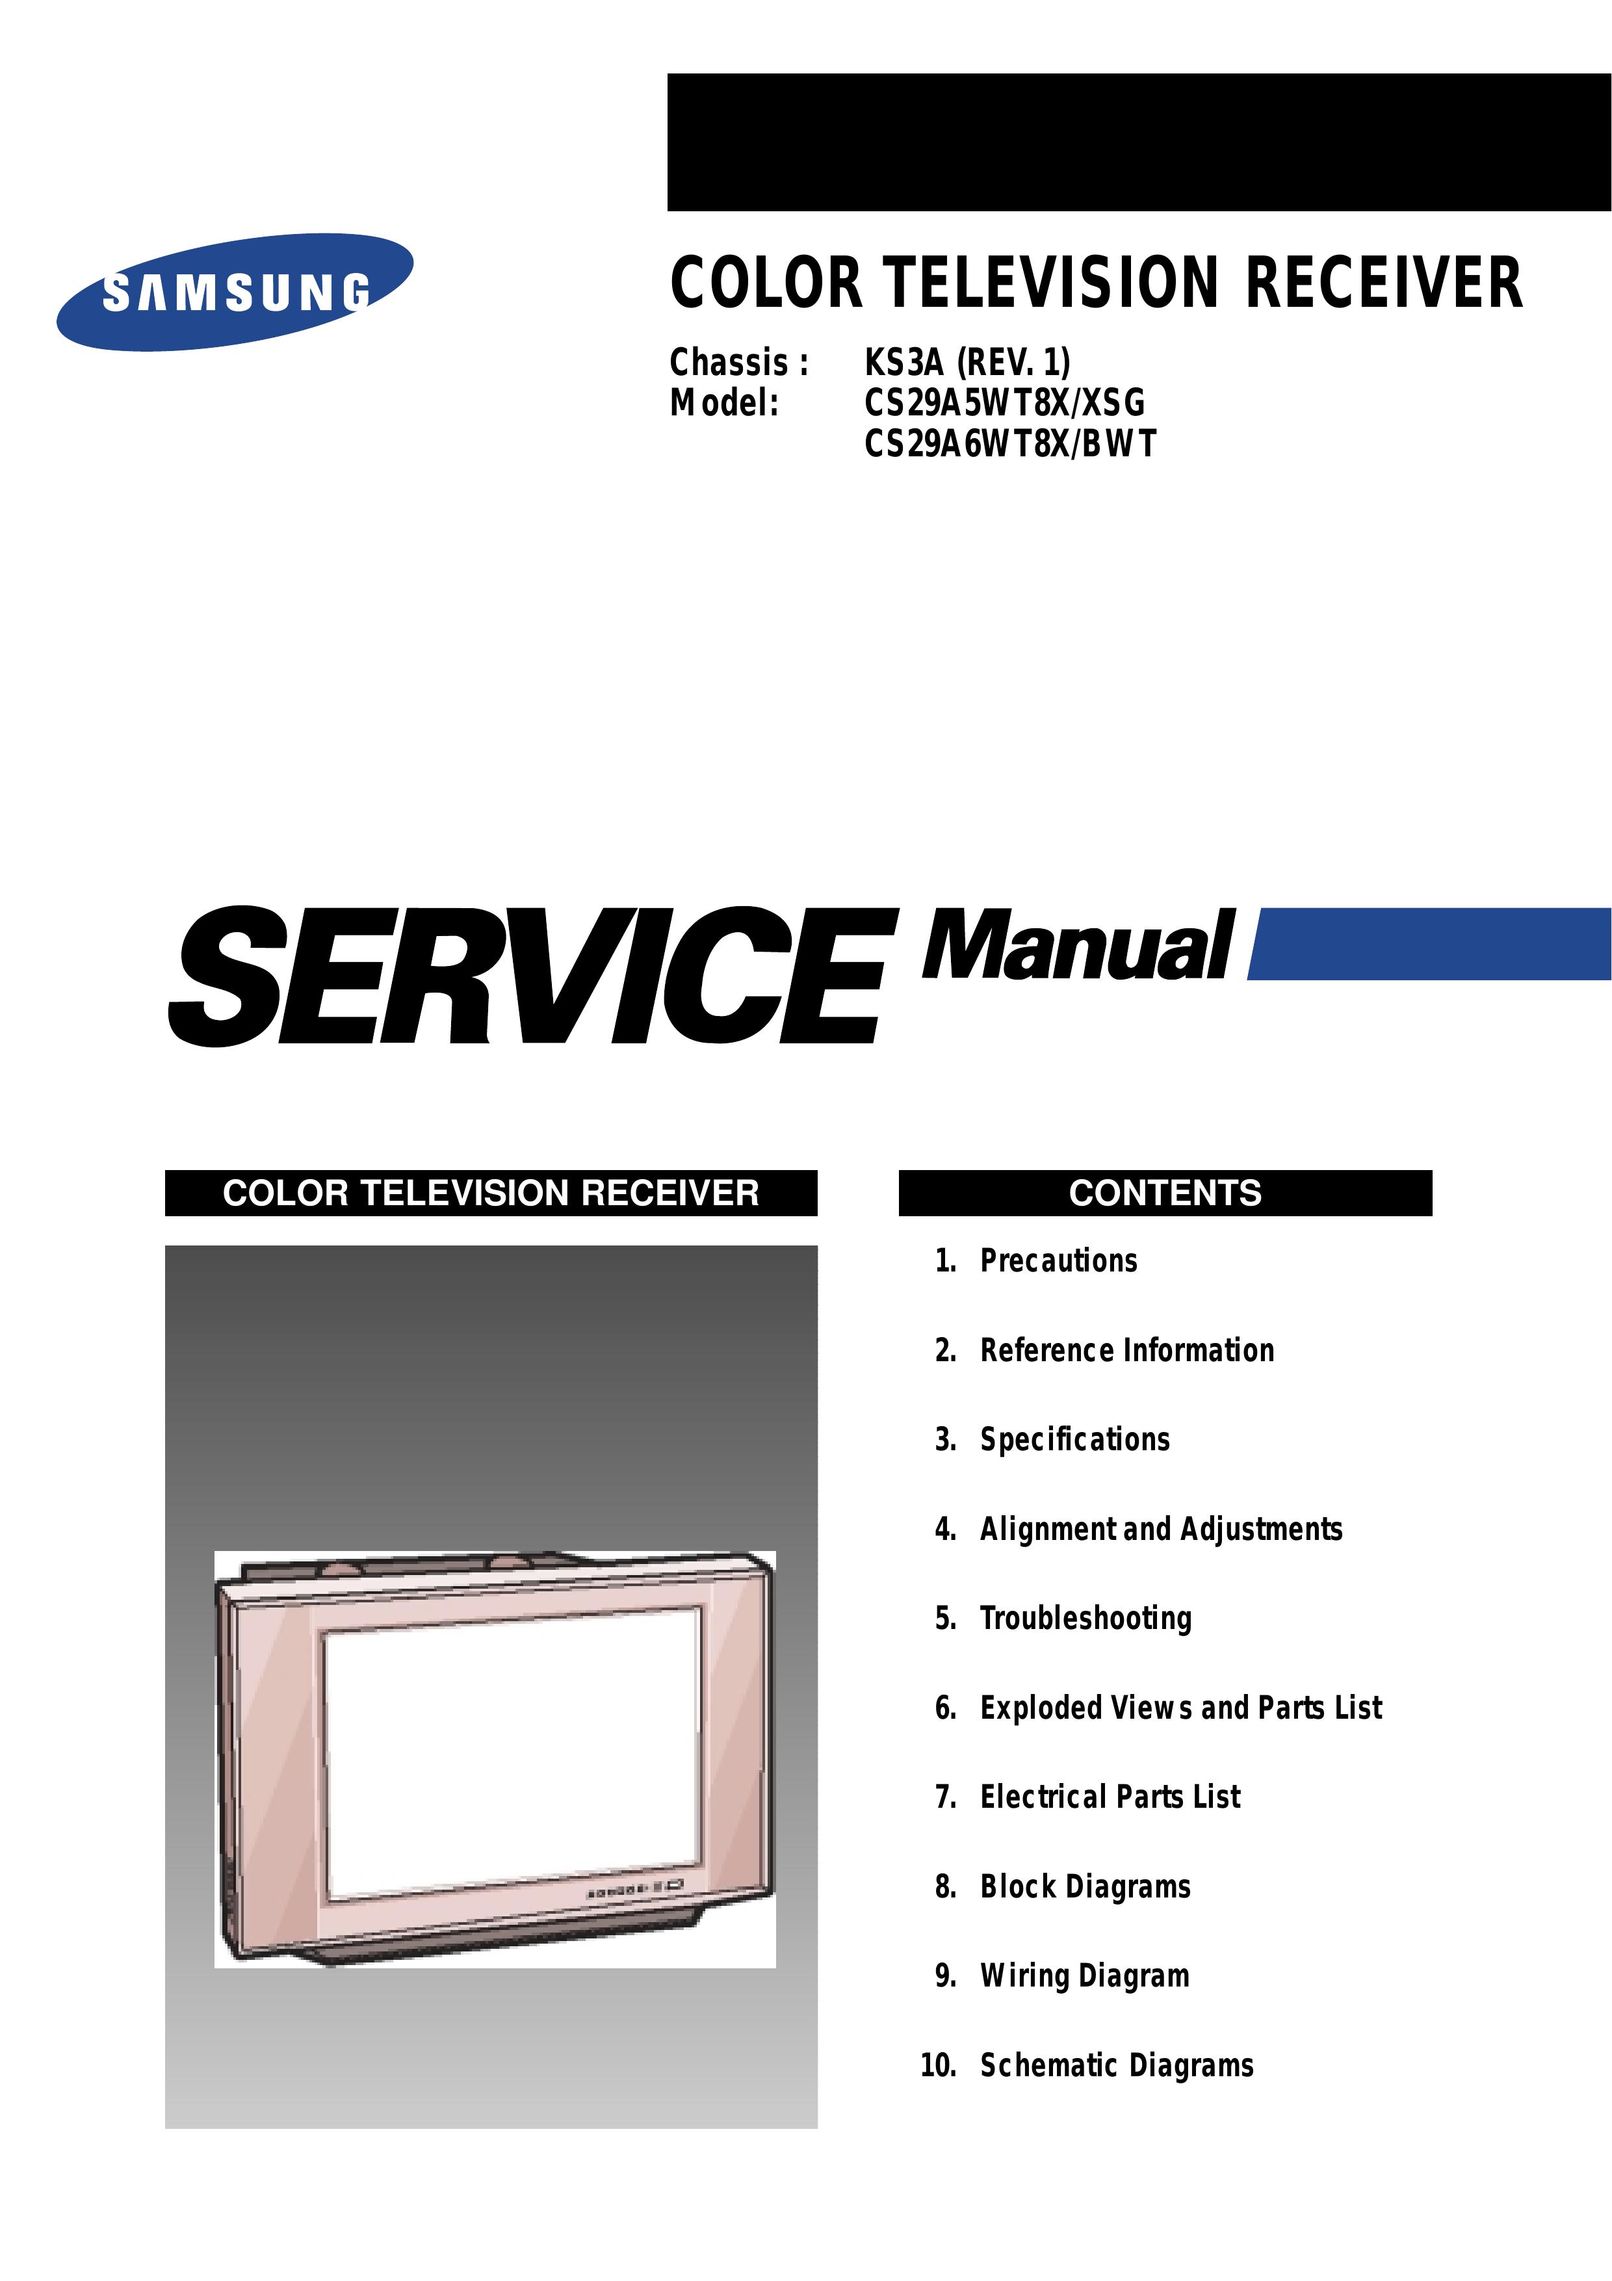 Samsung CS29A6WT8X/BWT TV Converter Box User Manual